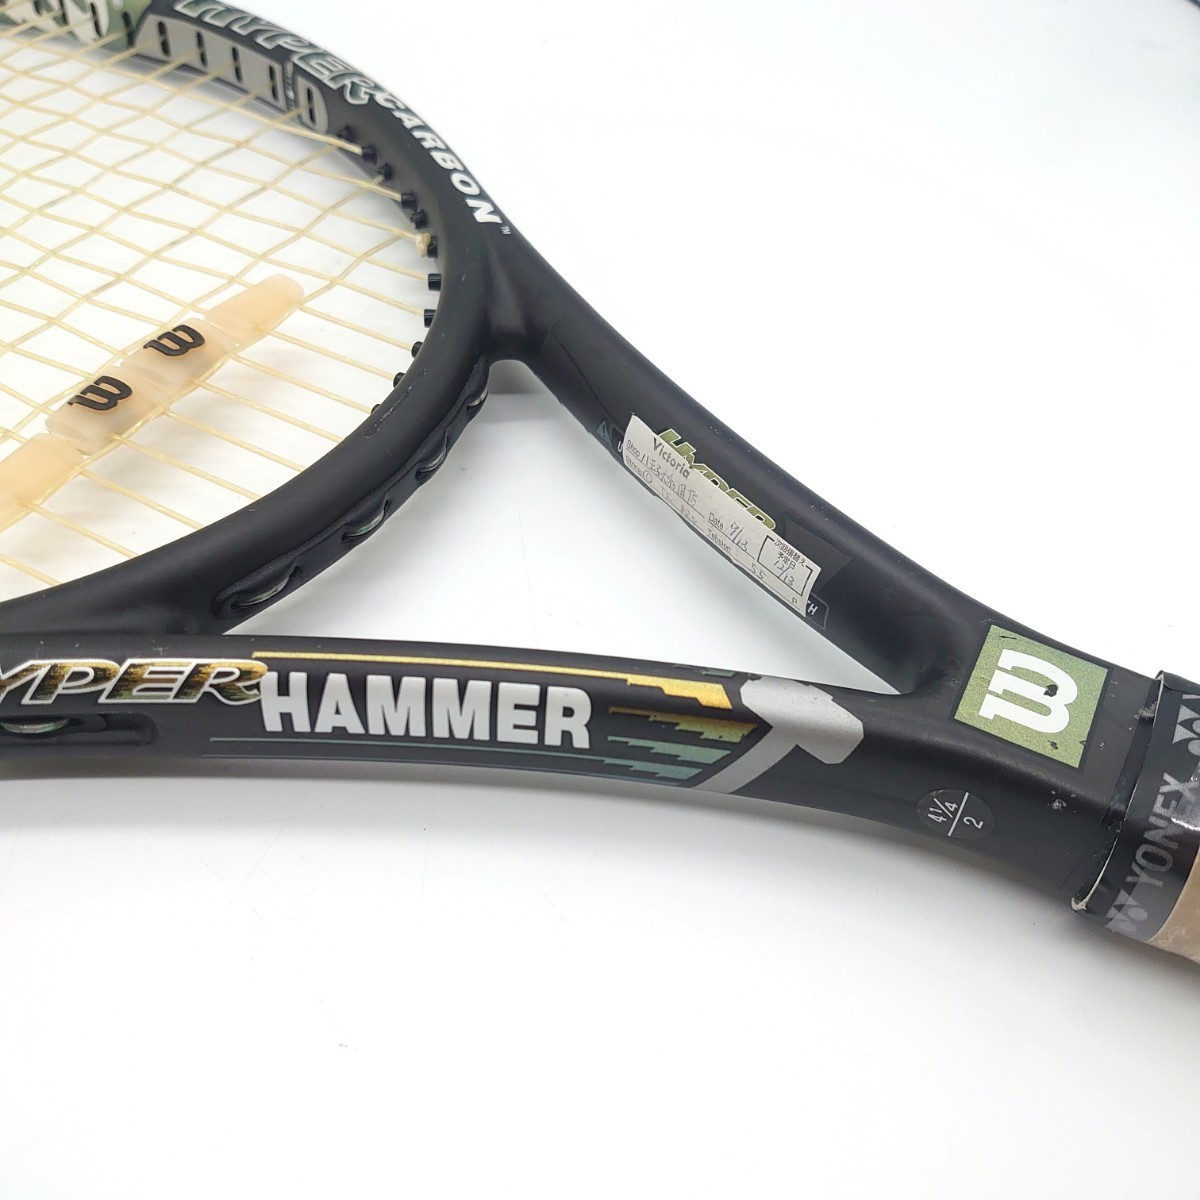 Wilson HYPER HAMMER 5.3 ウィルソン ハイパーハンマー 硬式テニス用